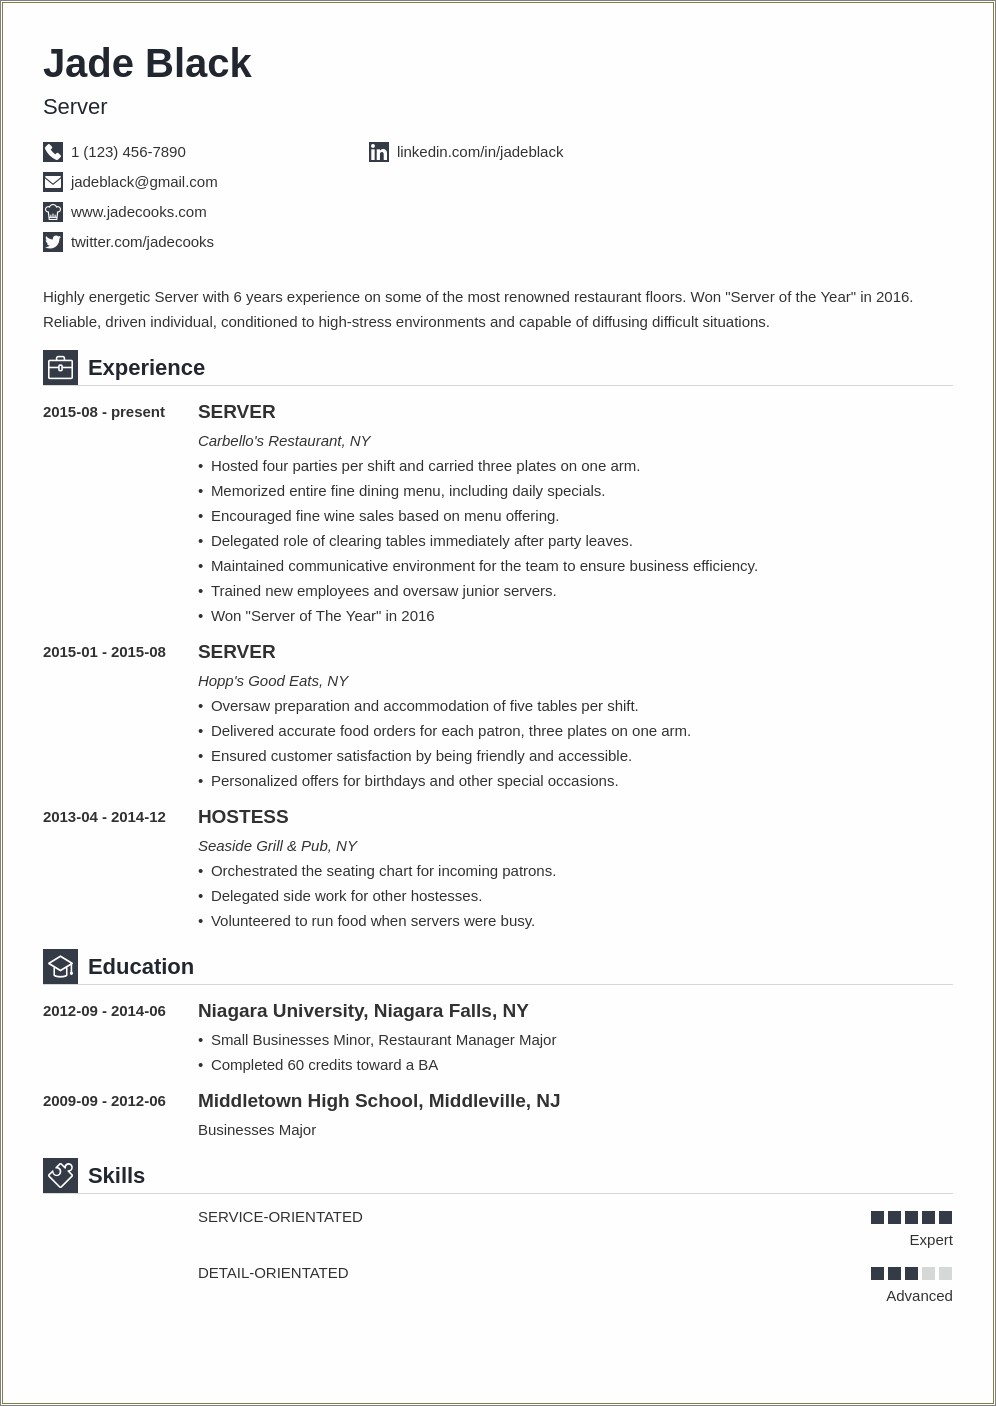 Lead Server Job Description For Resume